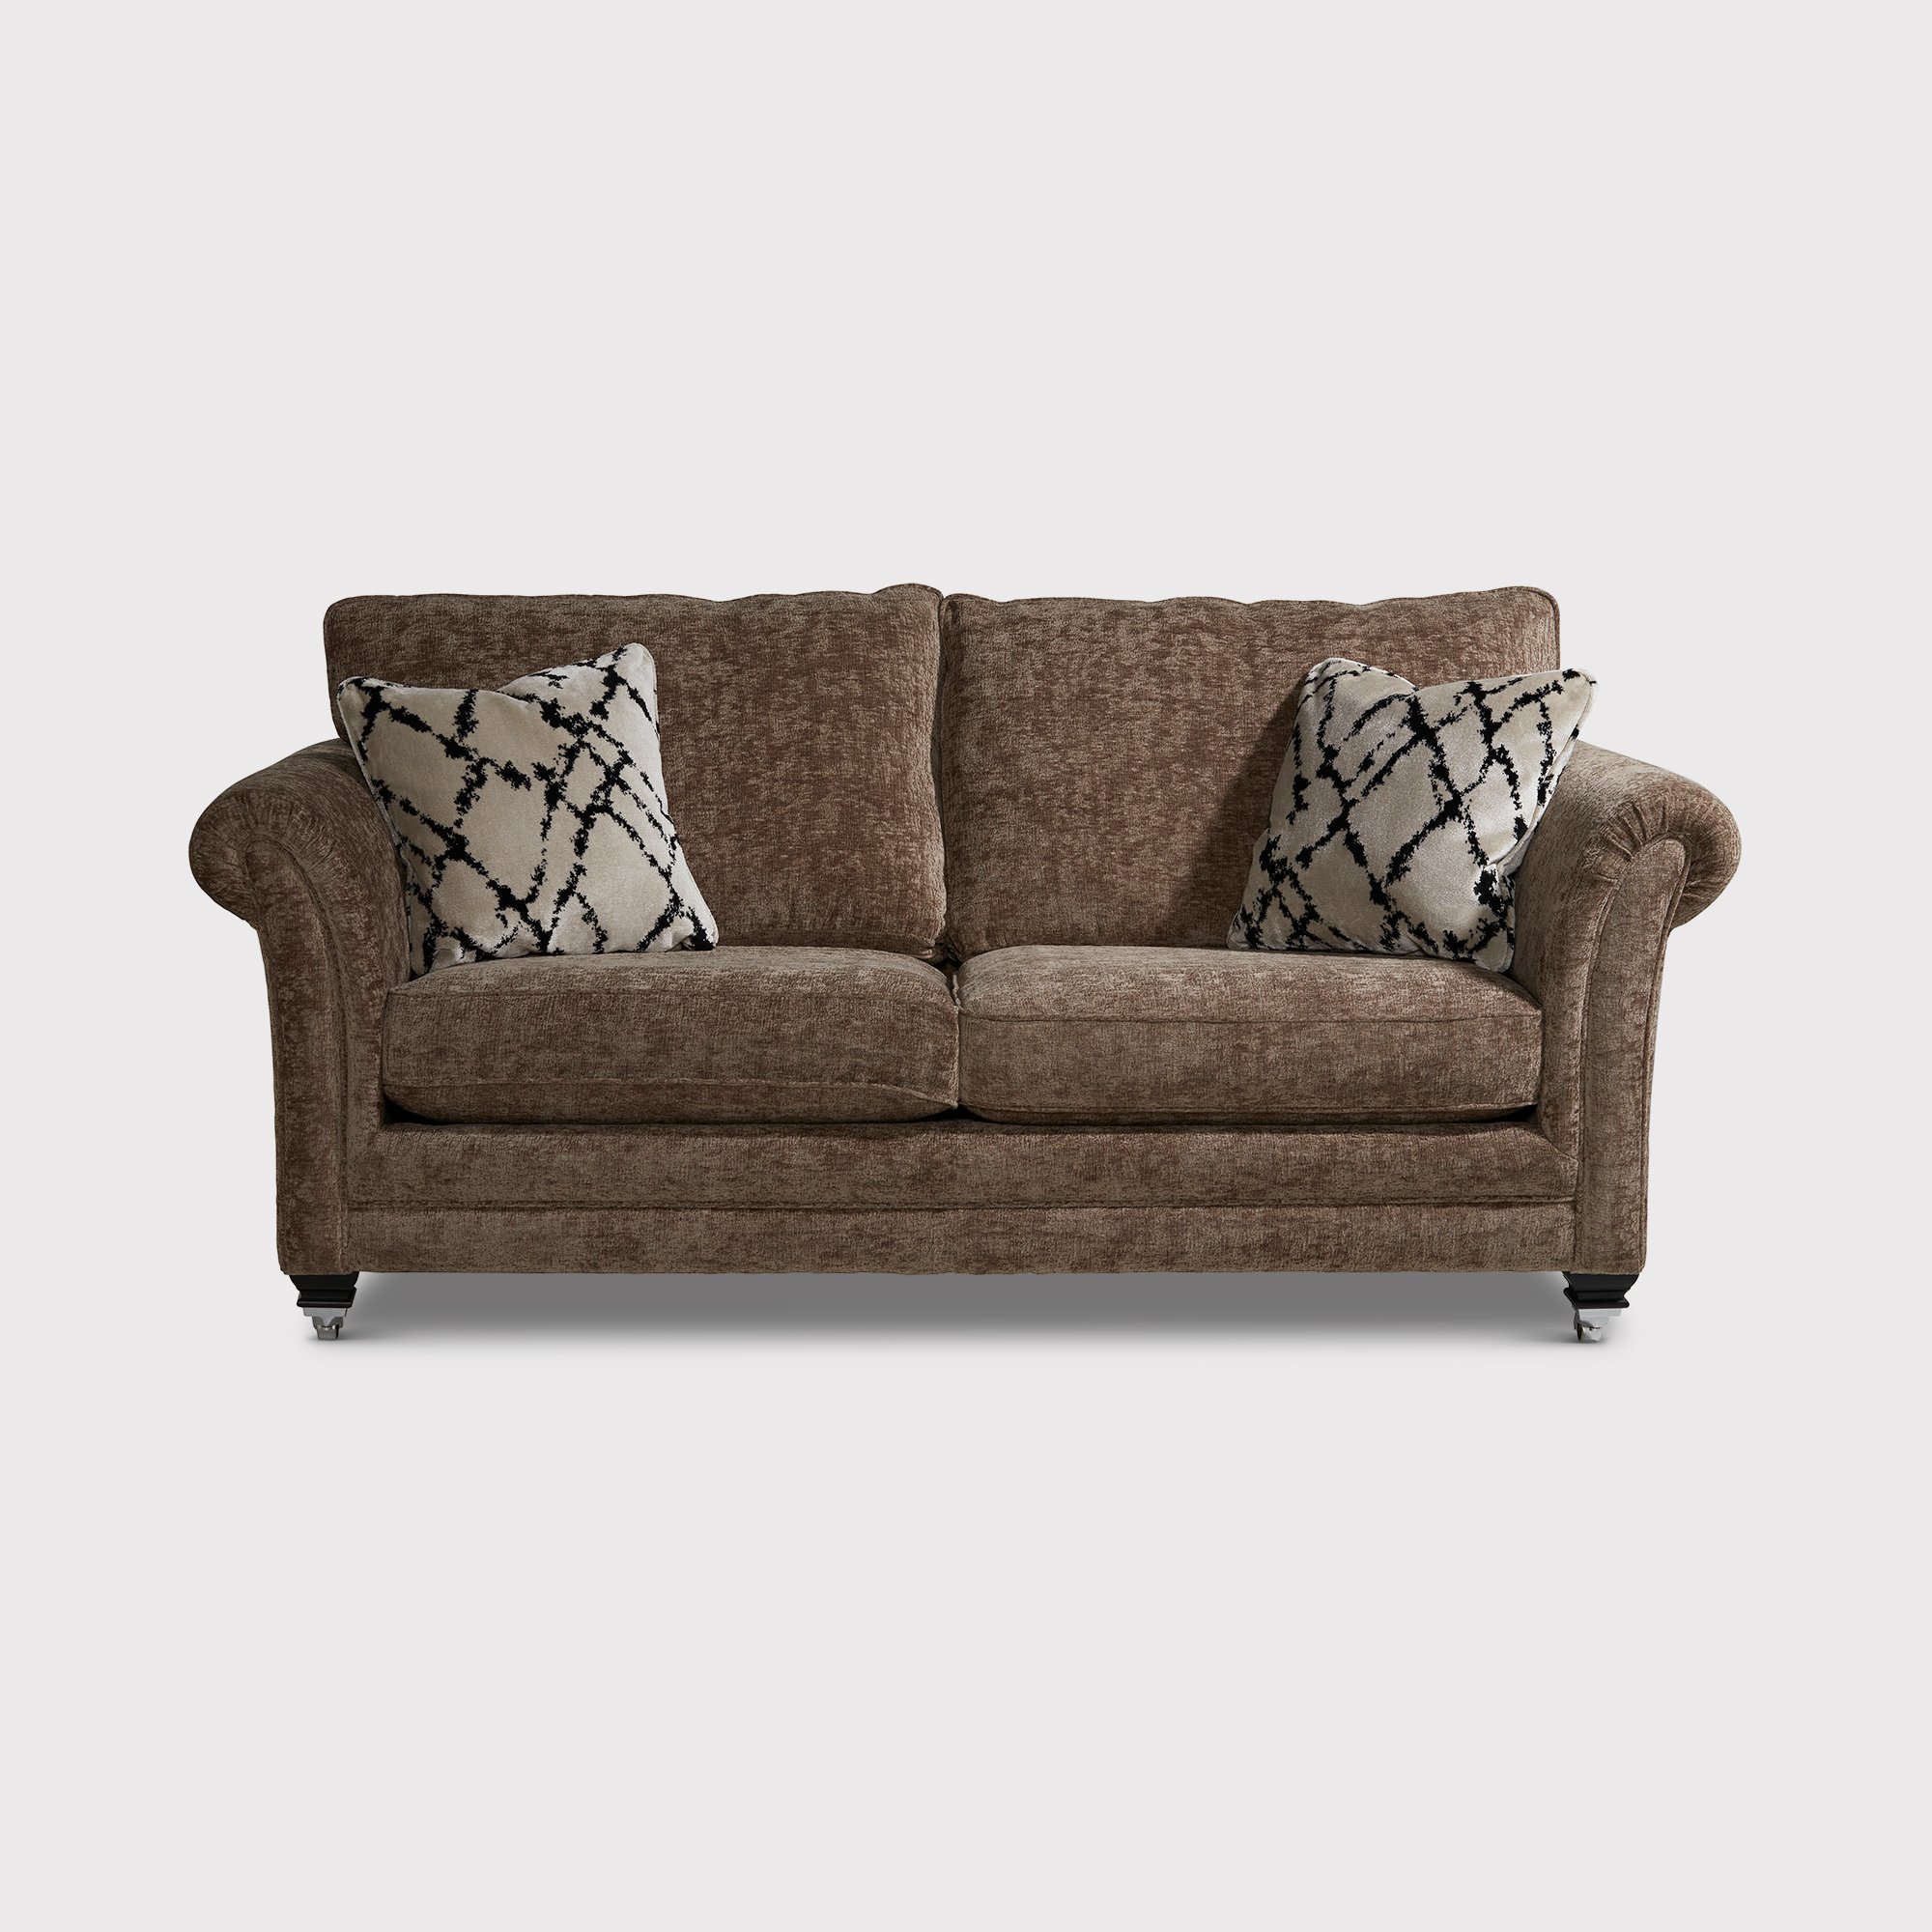 Lassington 3 Seater Sofa, Brown Fabric | Barker & Stonehouse